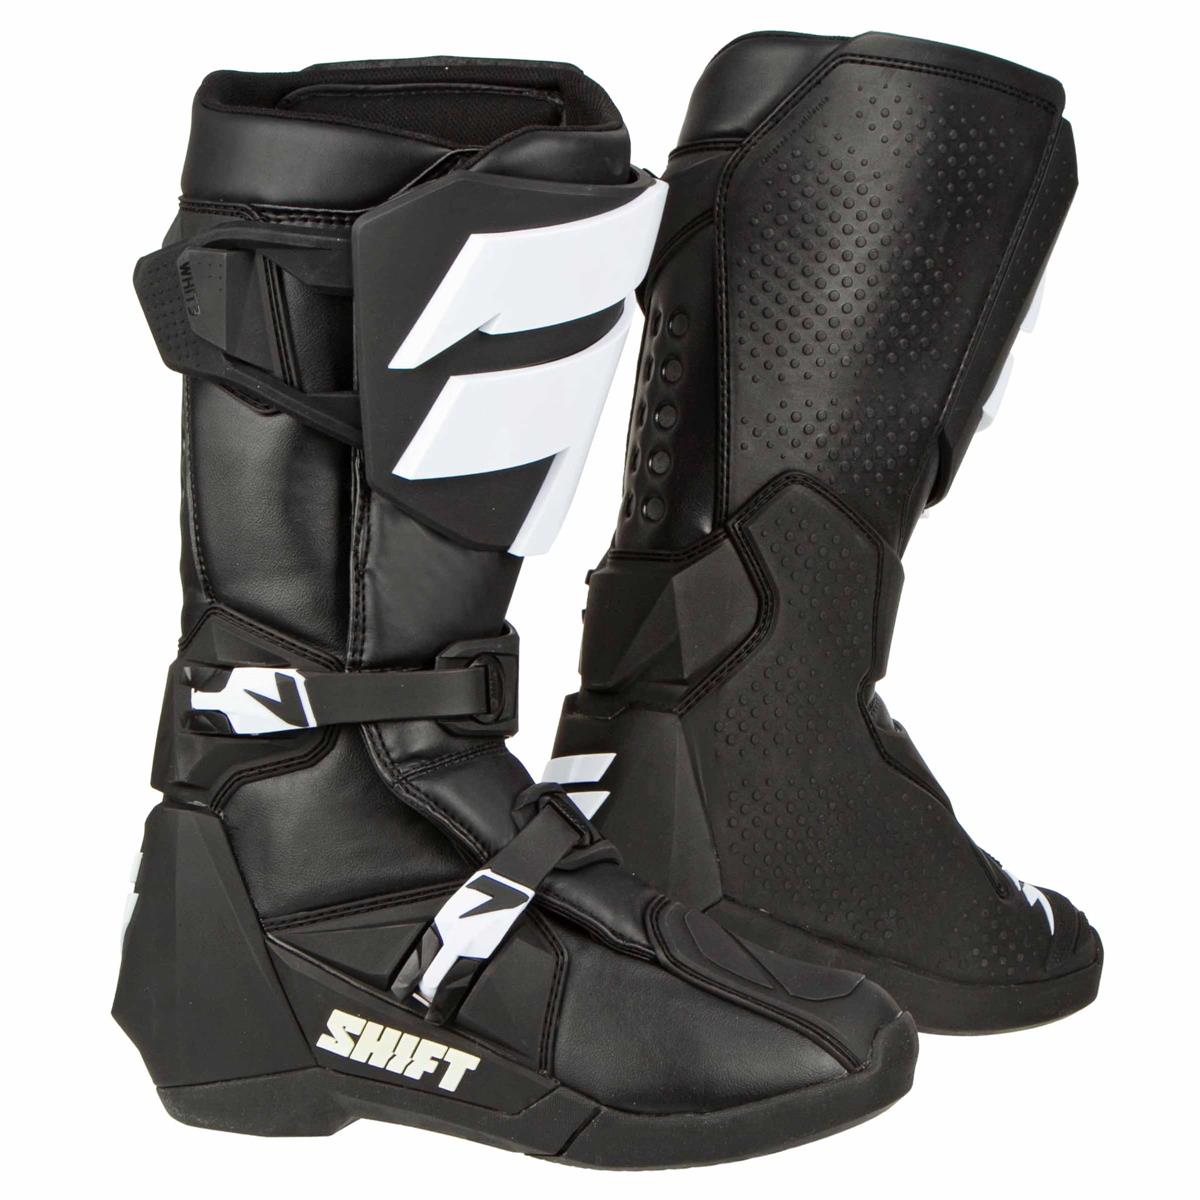 Shift MX Boots Whit3 Label Black